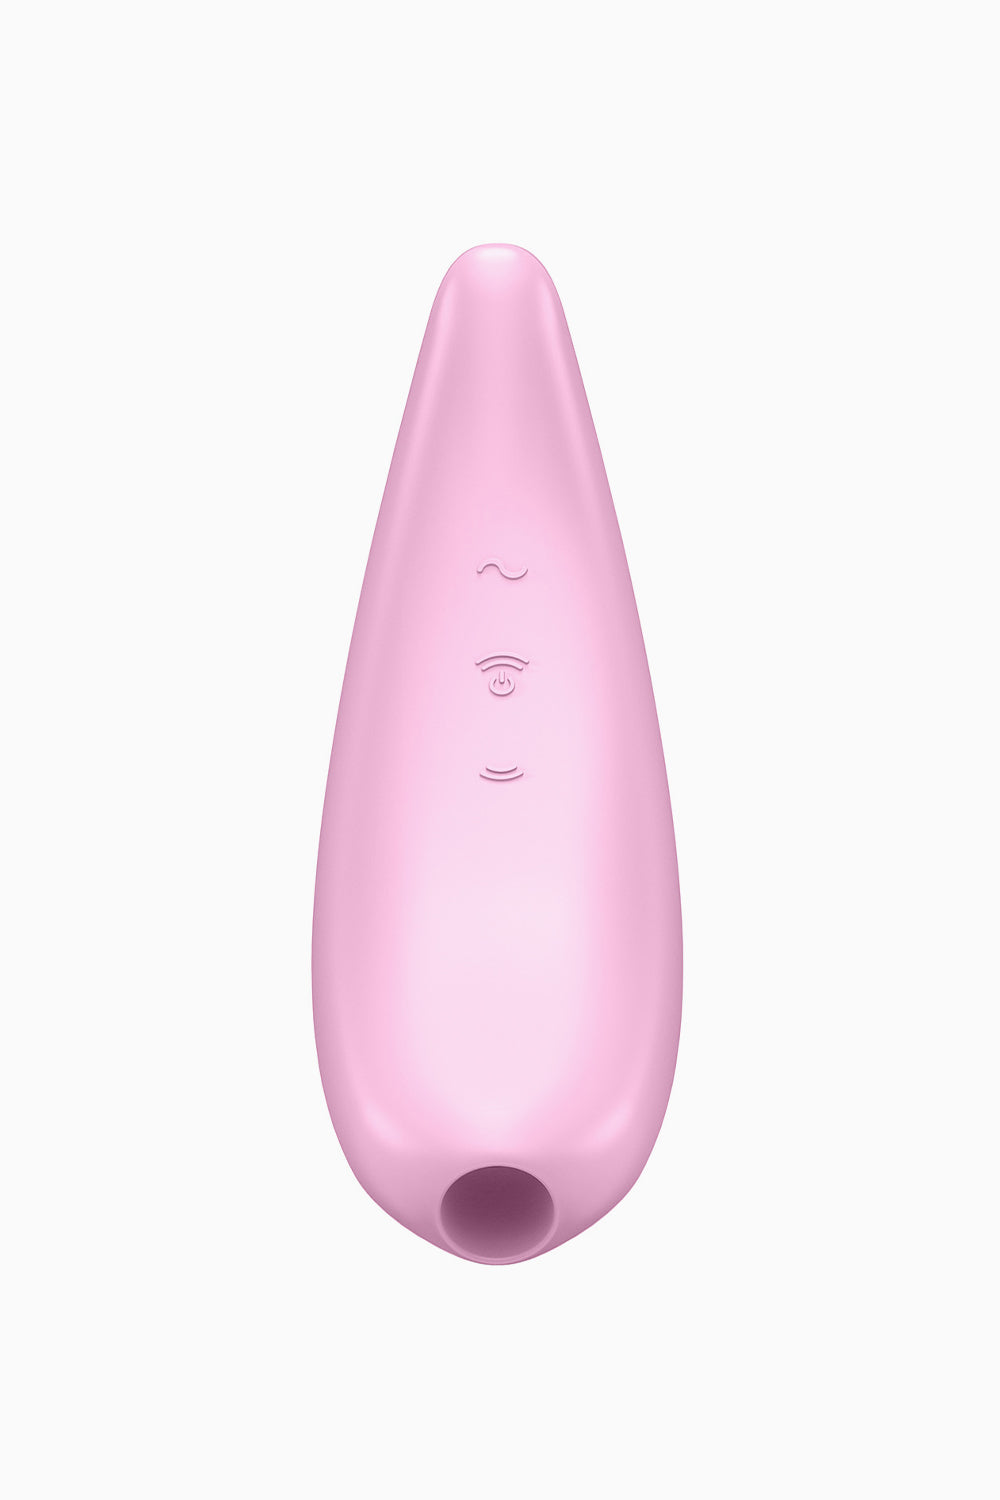 Satisfyer Curvy 3+ Air Pulse Stimulator & Vibrator Pink, 5.5 Inches